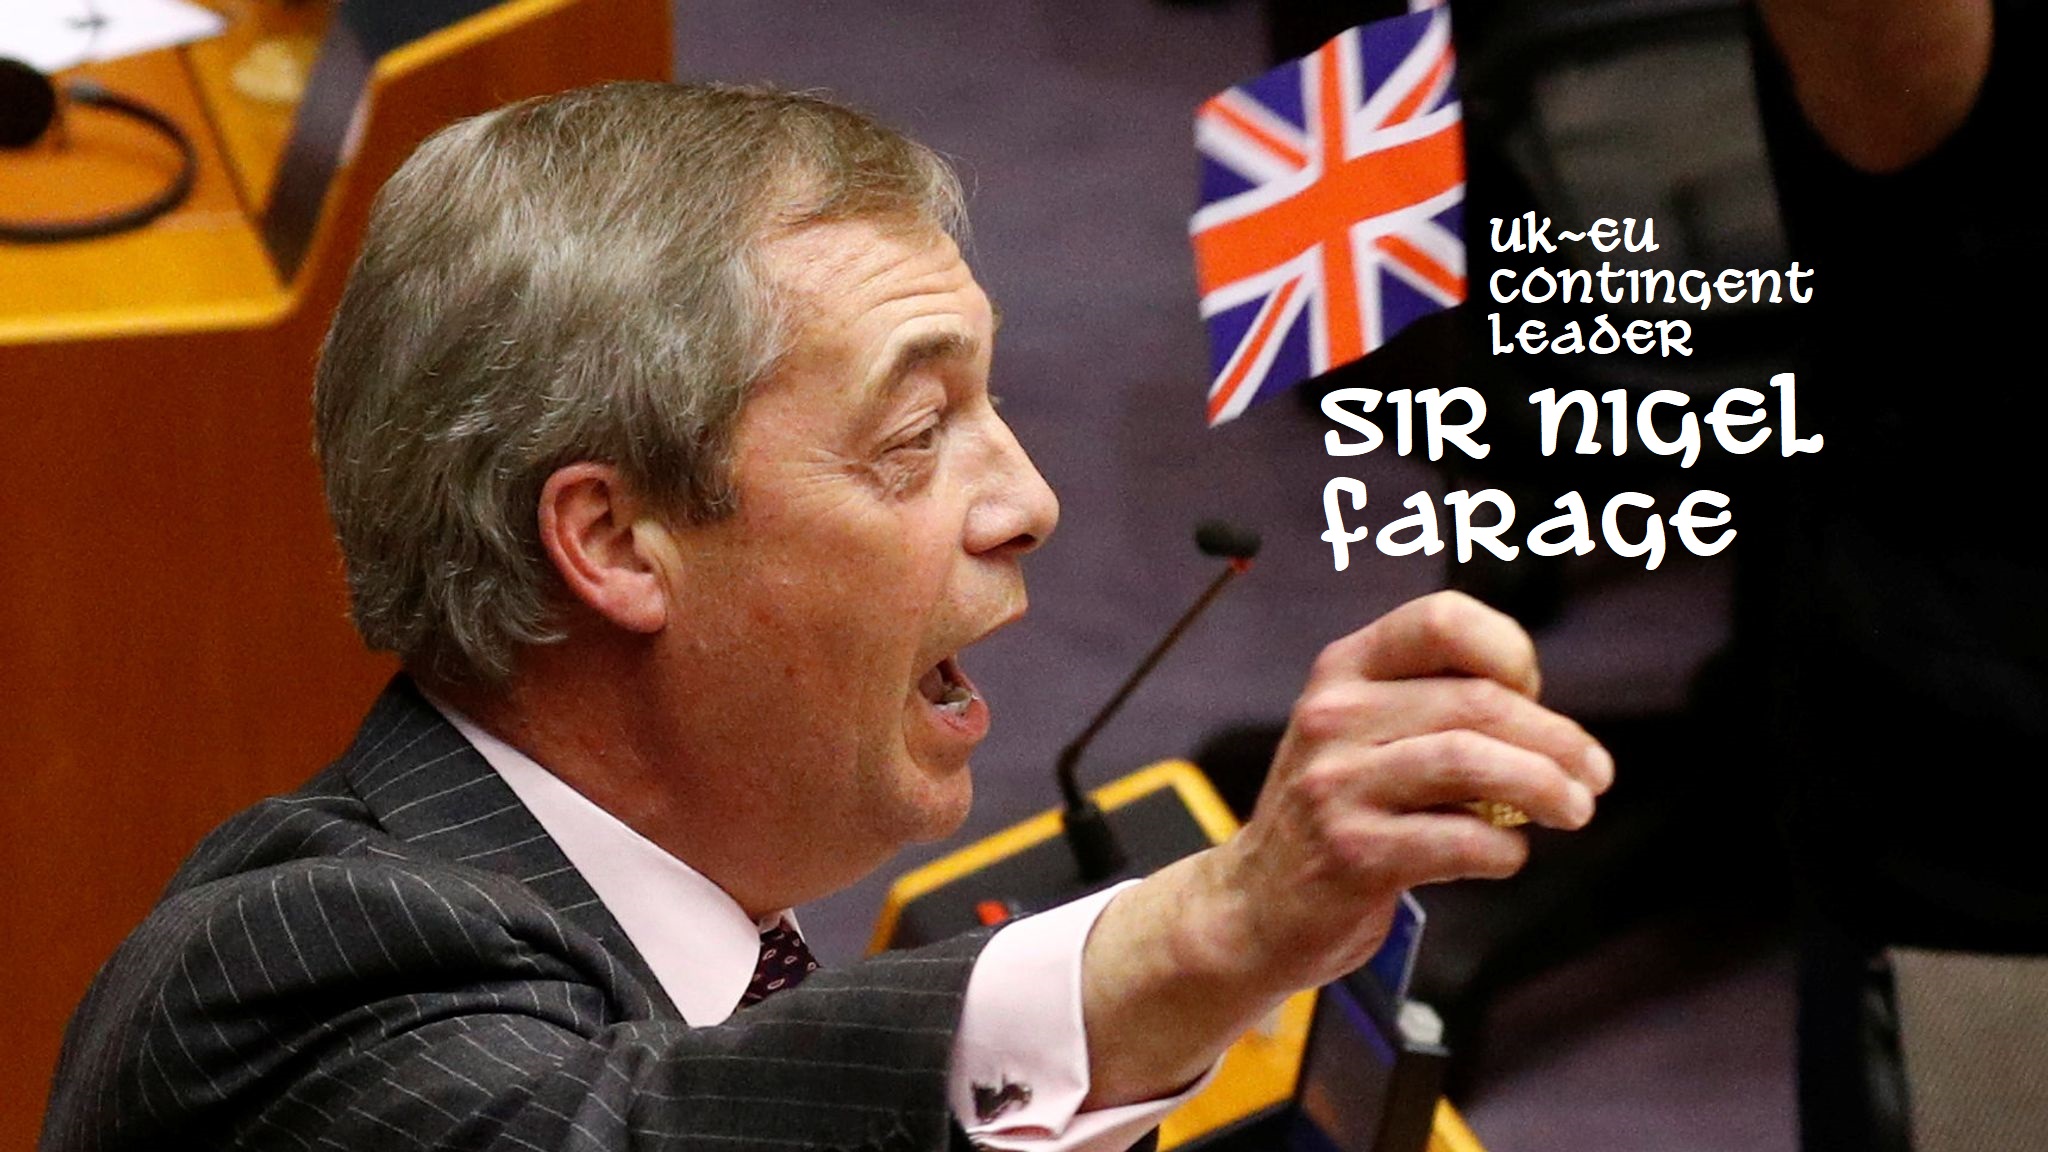 Sir Nigel Farage - UK Leader at EU